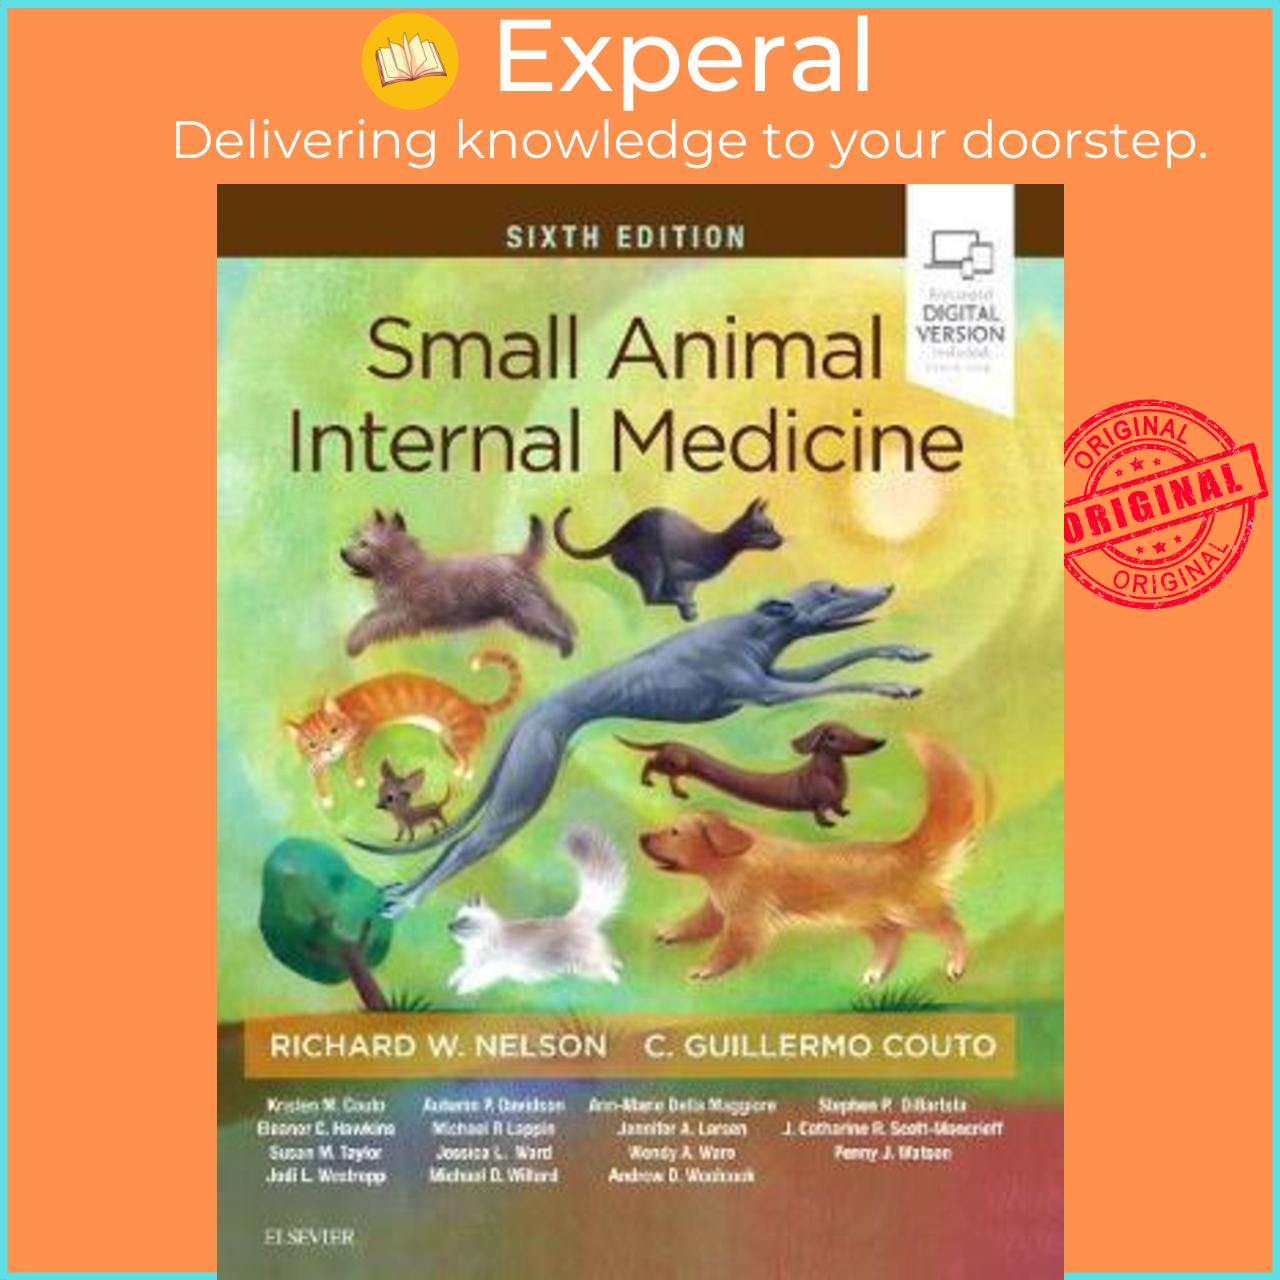 Small Animal Internal Medicine by Richard W. Nelson (US edition, hardcover)  | Lazada Singapore